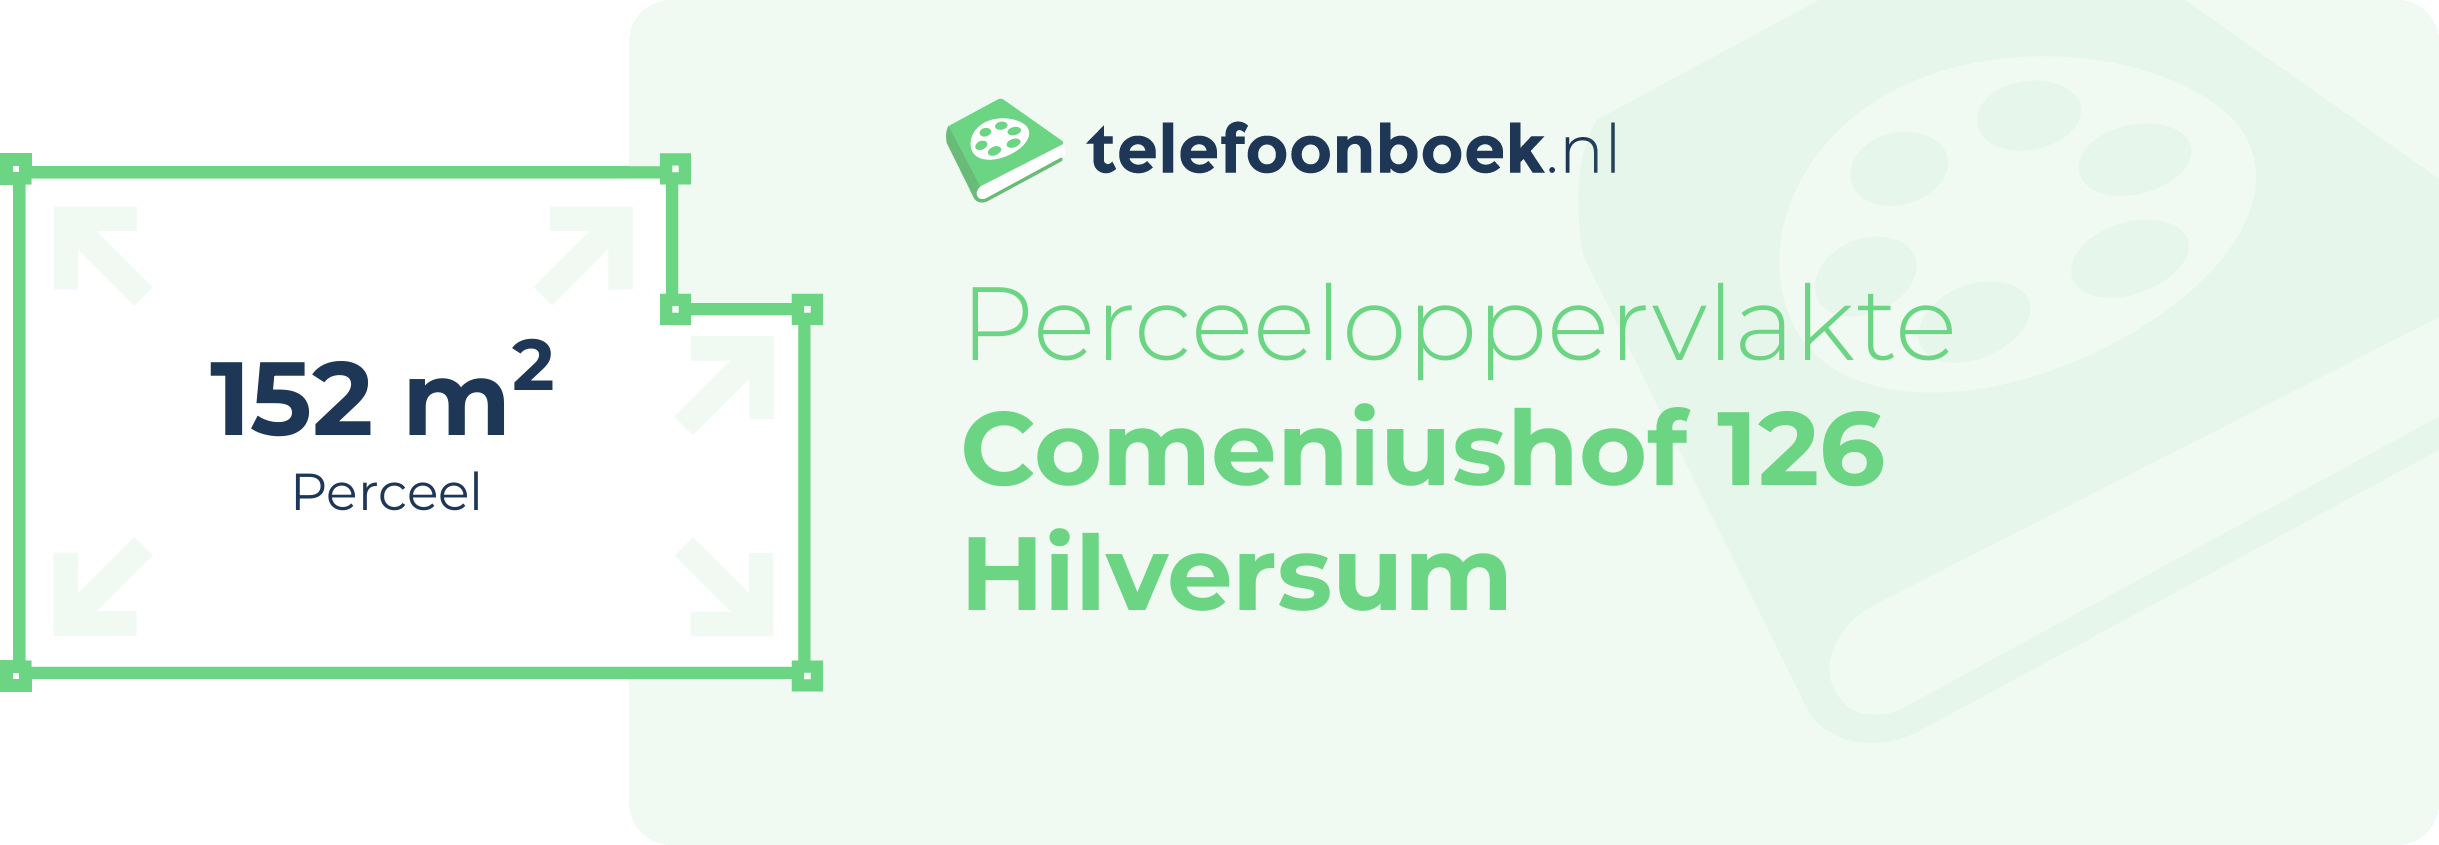 Perceeloppervlakte Comeniushof 126 Hilversum